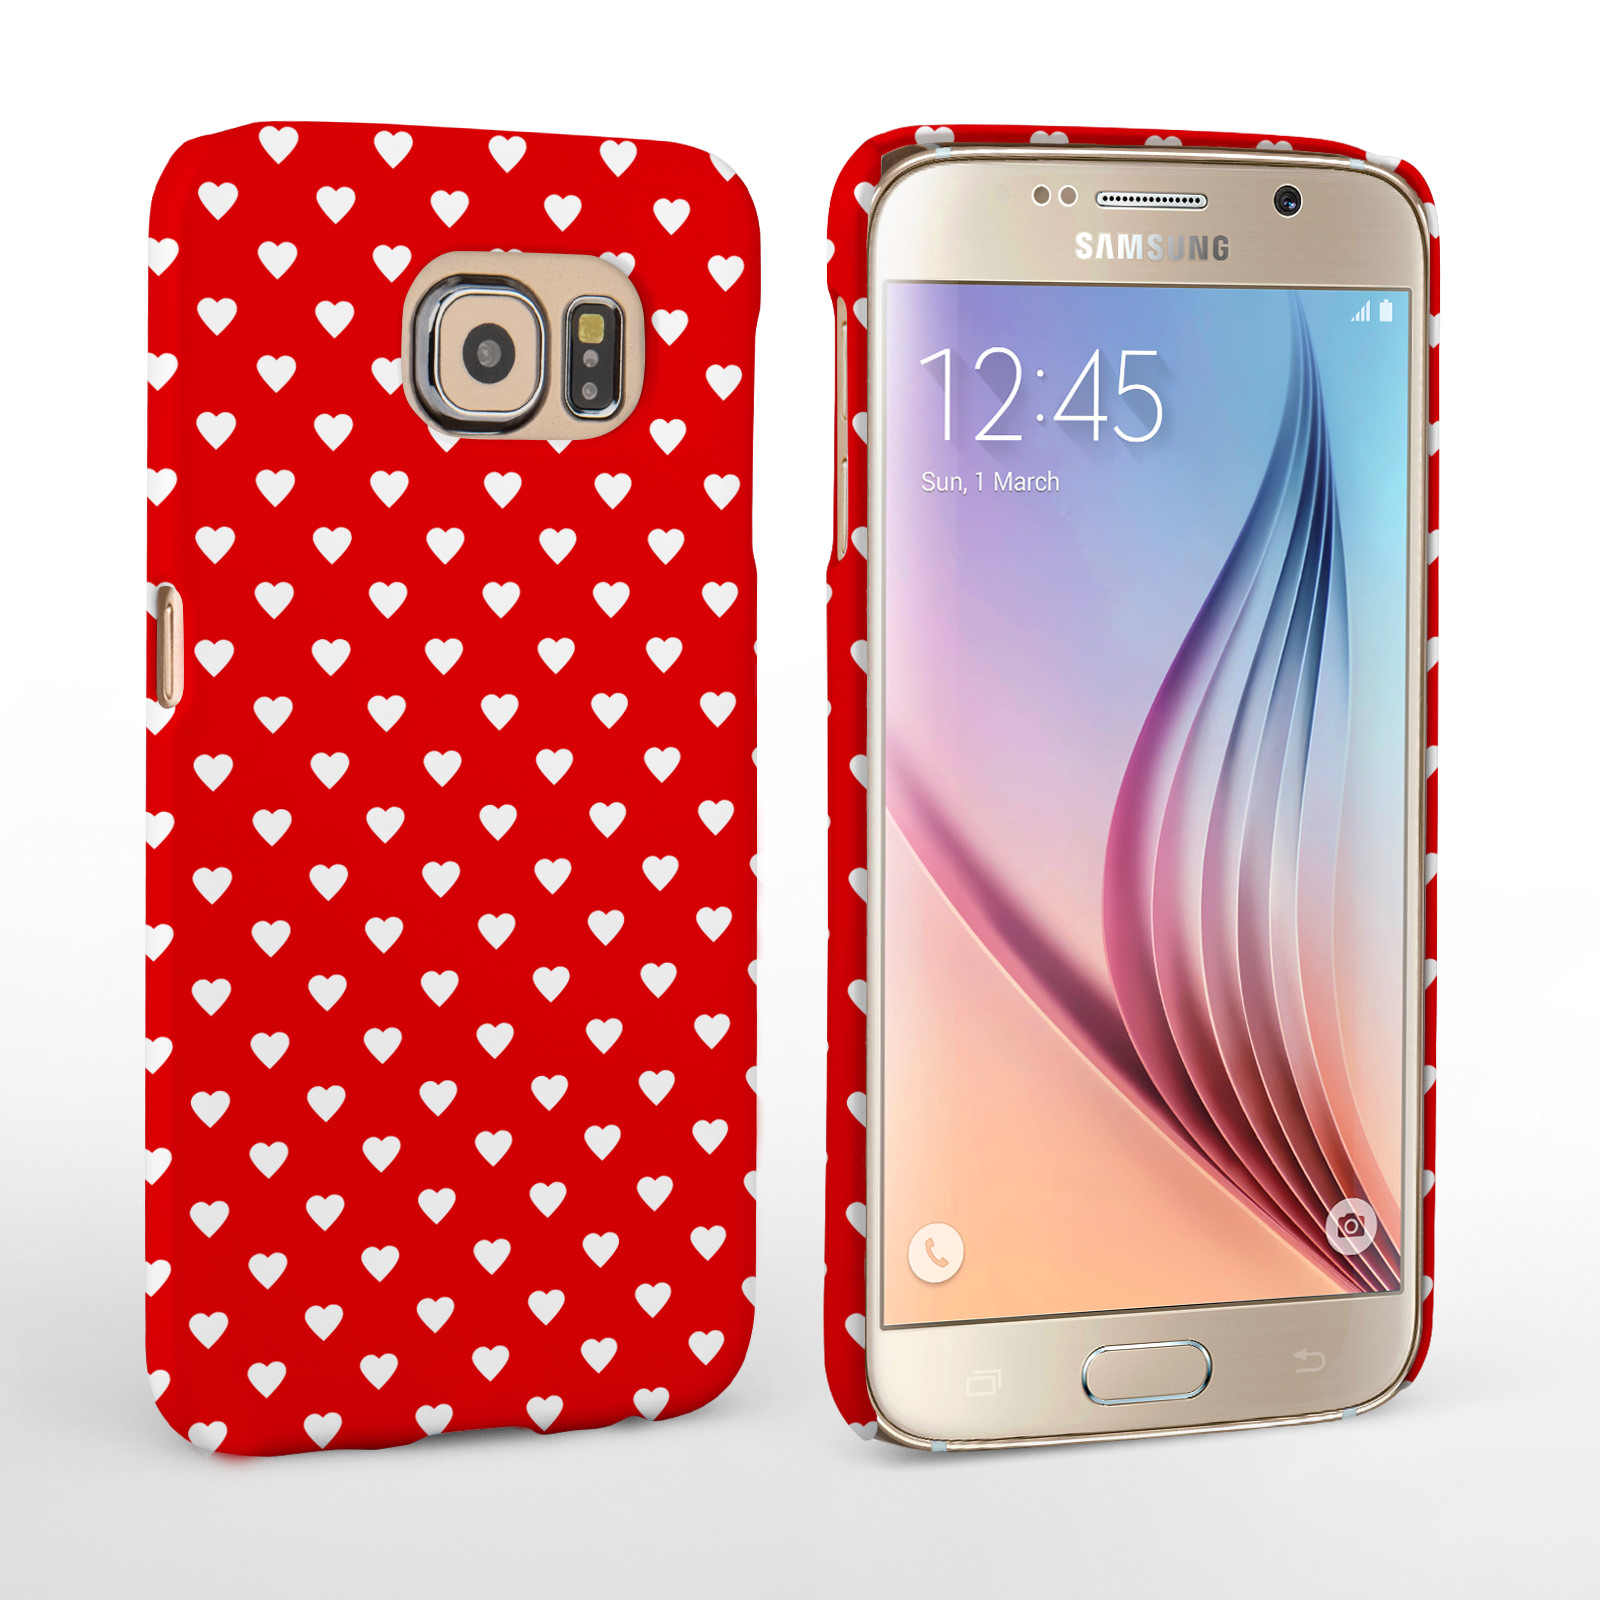 Caseflex Samsung Galaxy S6 Cute Hearts Case - Red